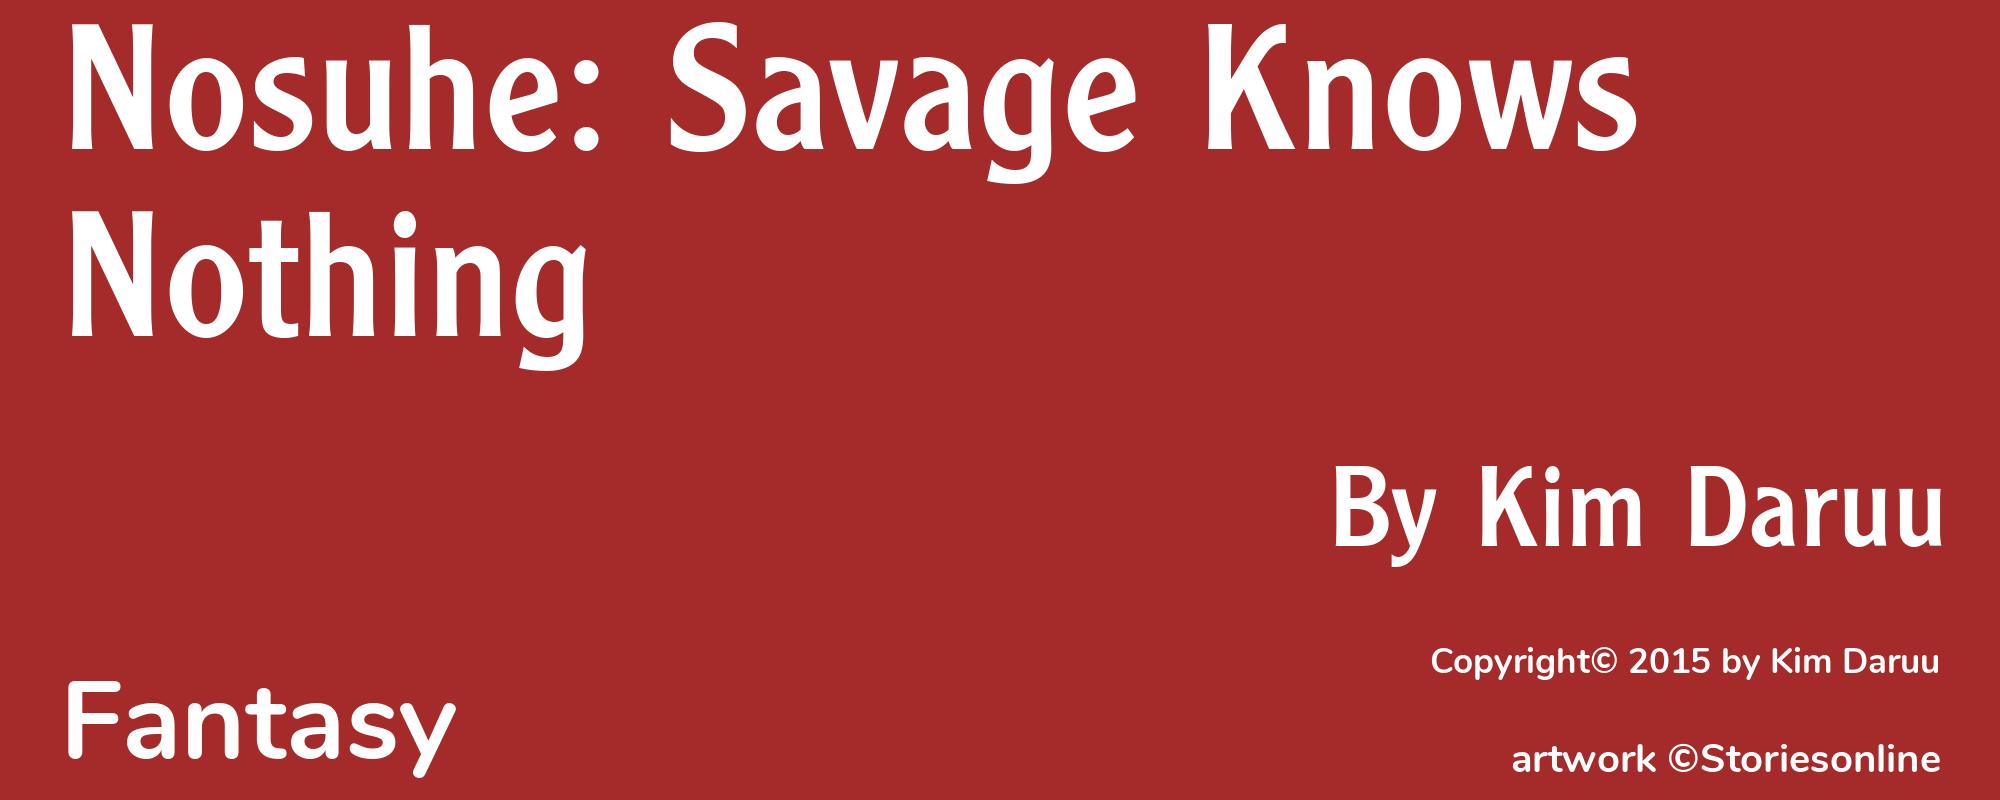 Nosuhe: Savage Knows Nothing - Cover